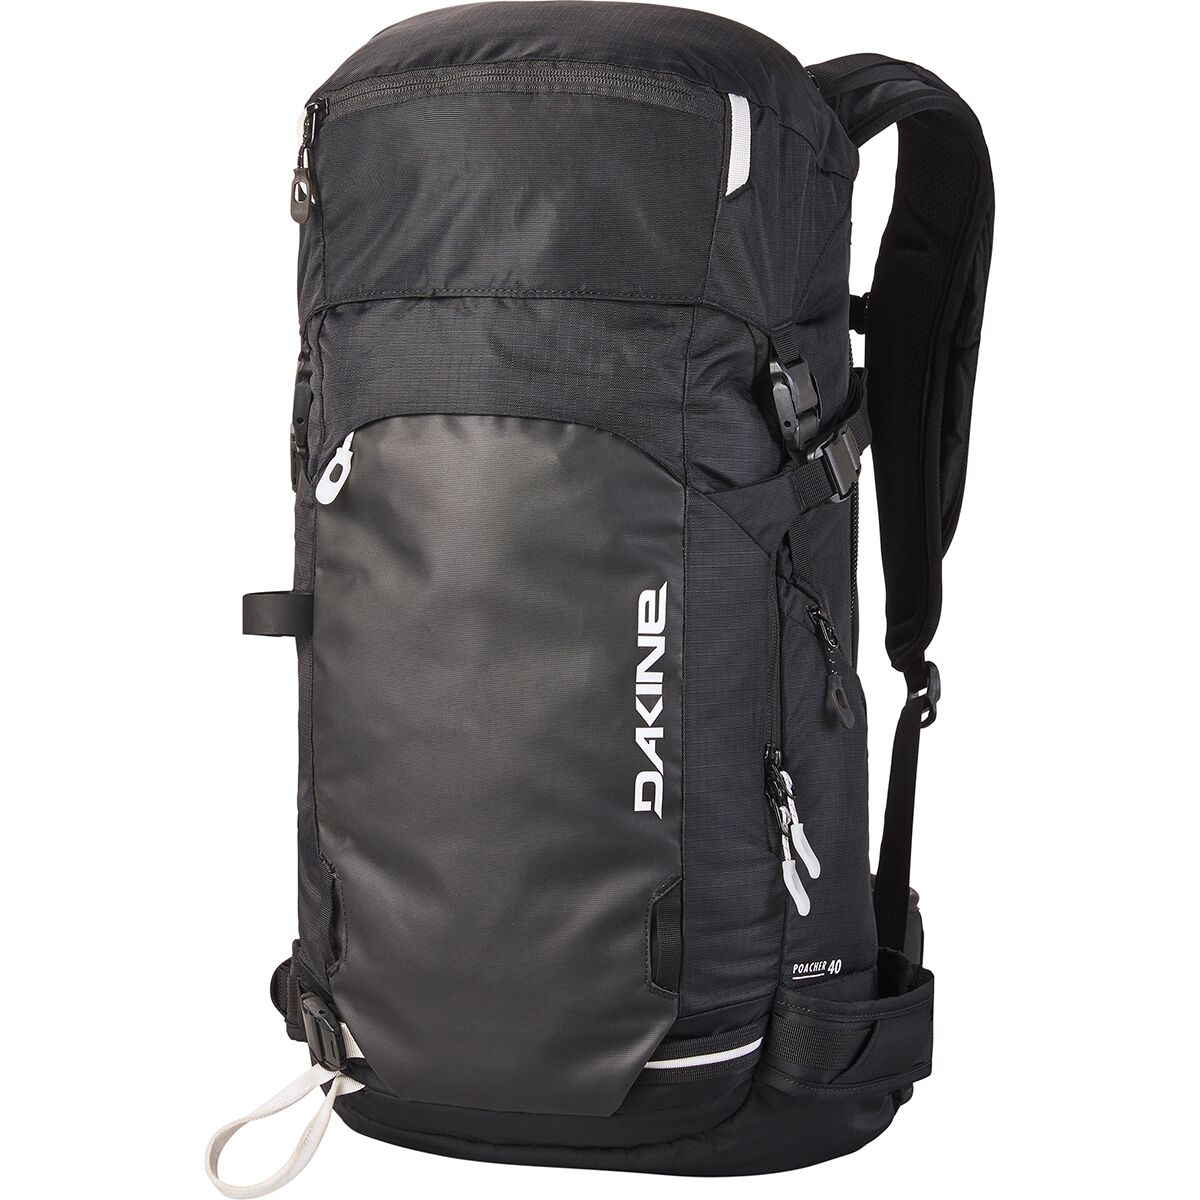 DAKINE Poacher 40L Backpack